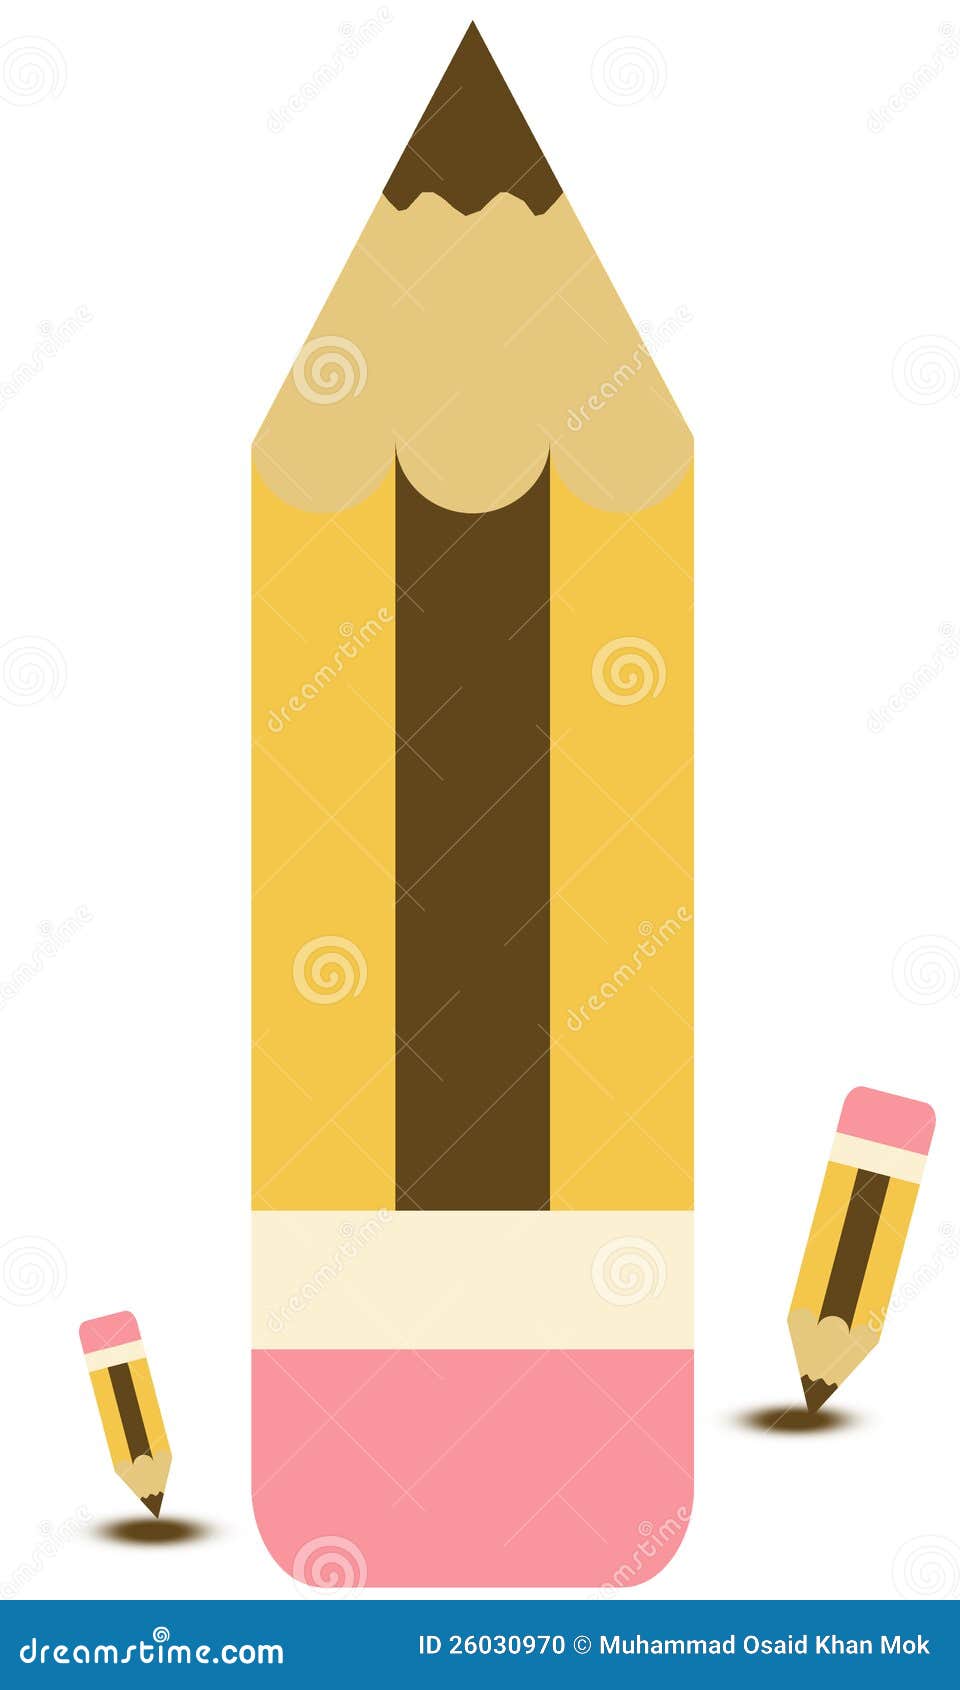 pencil with eraser.